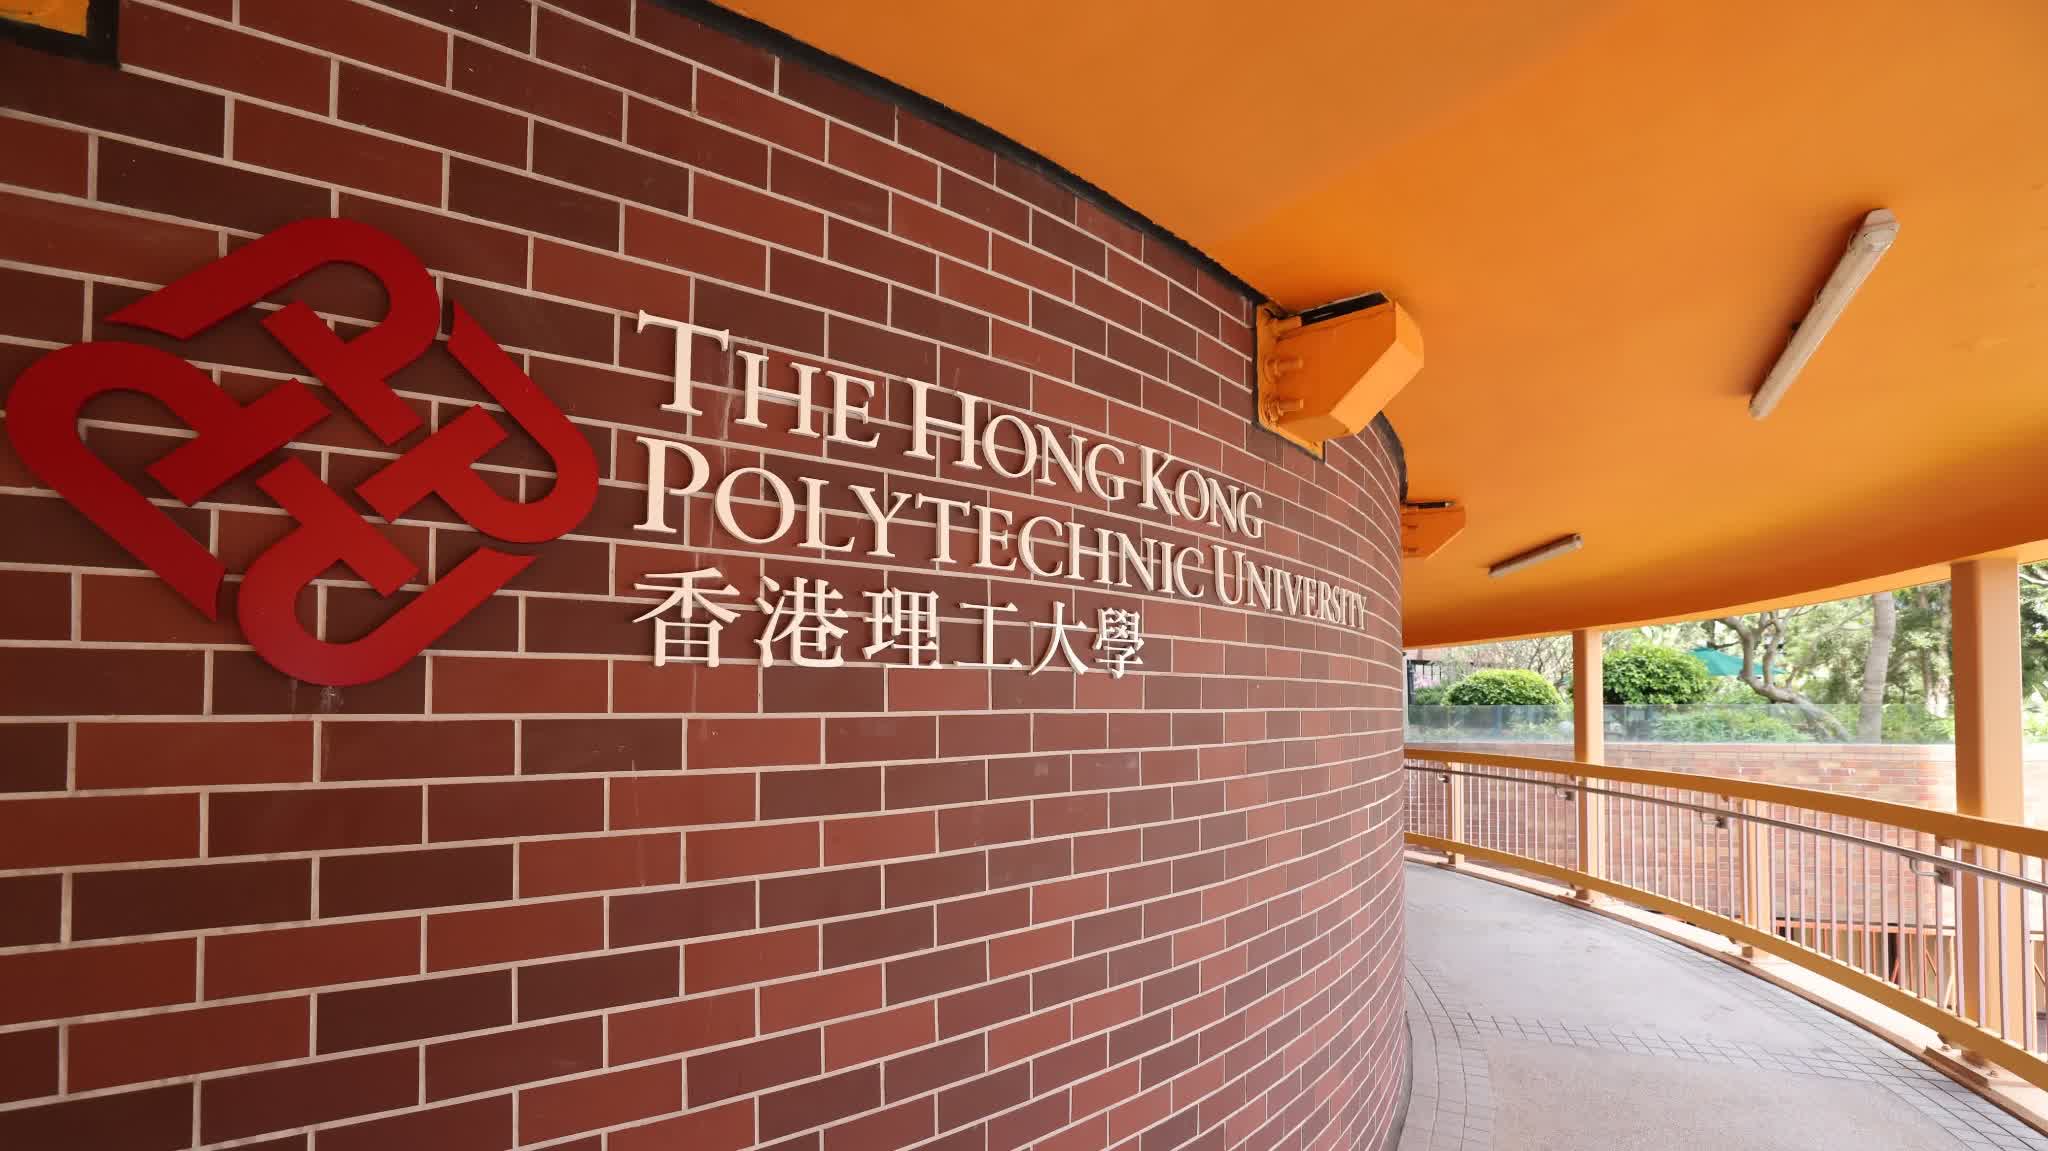 Four universities in HK fall in global rankings